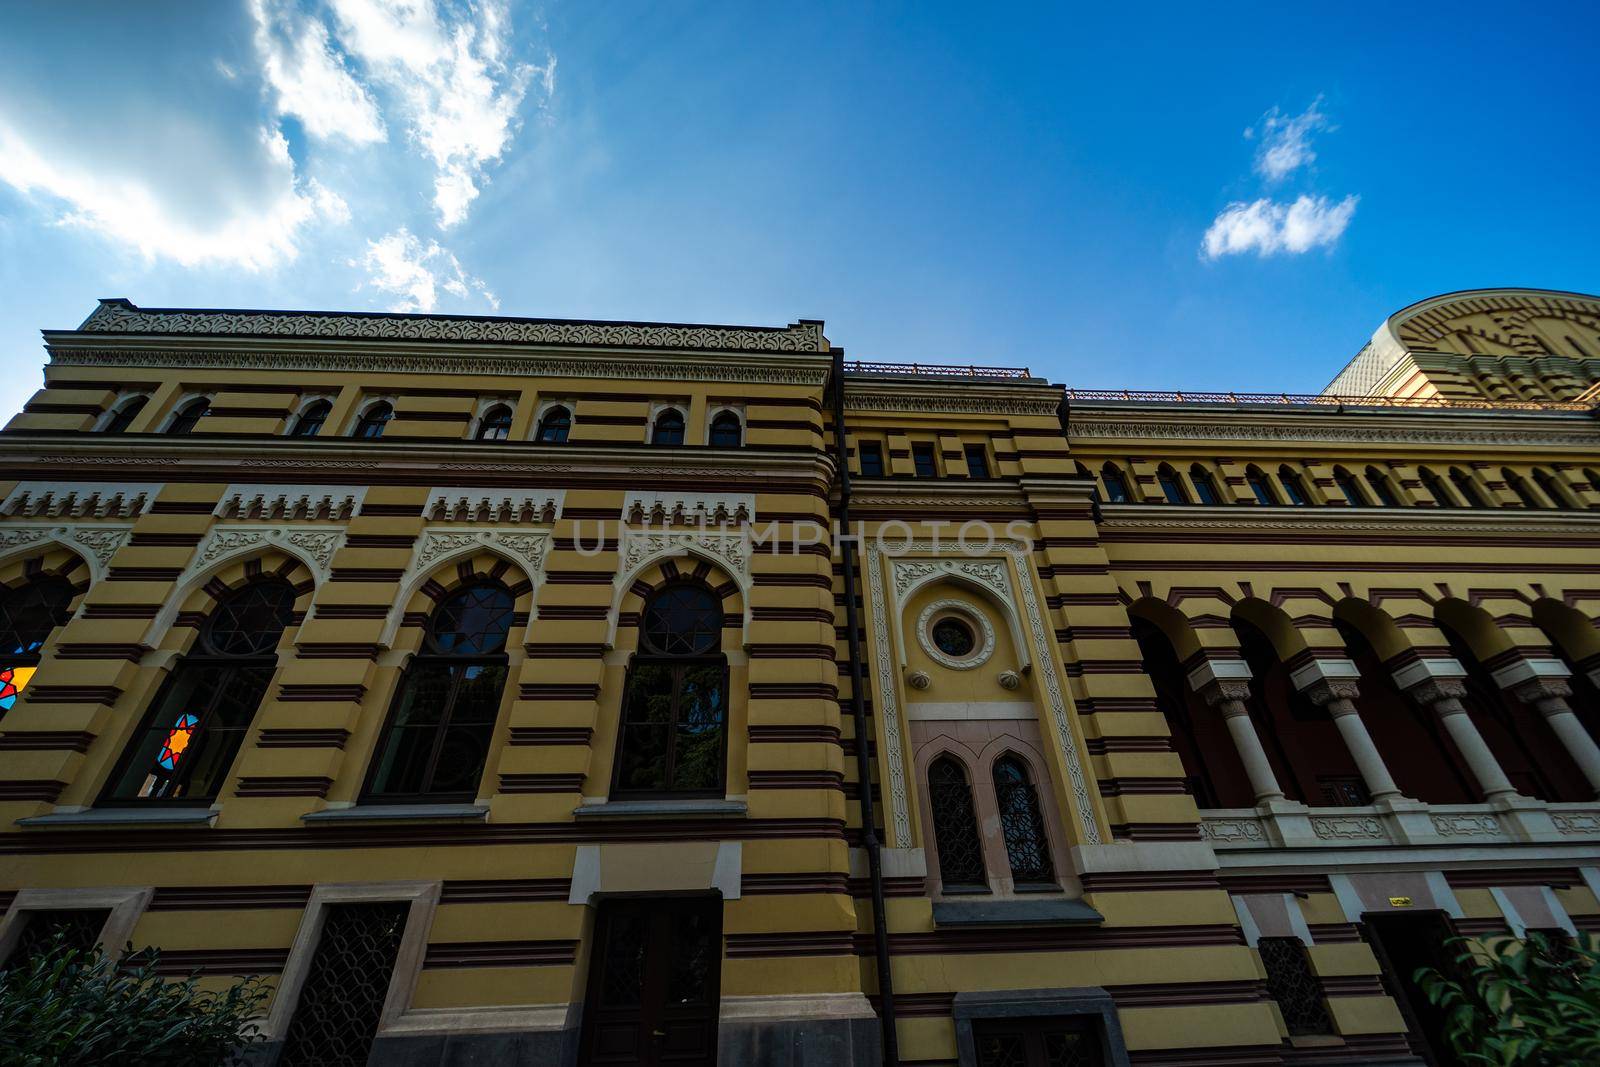 Famous Tbilisi State Opera House on Rustaveli avenue is one of the georgian capital landmark